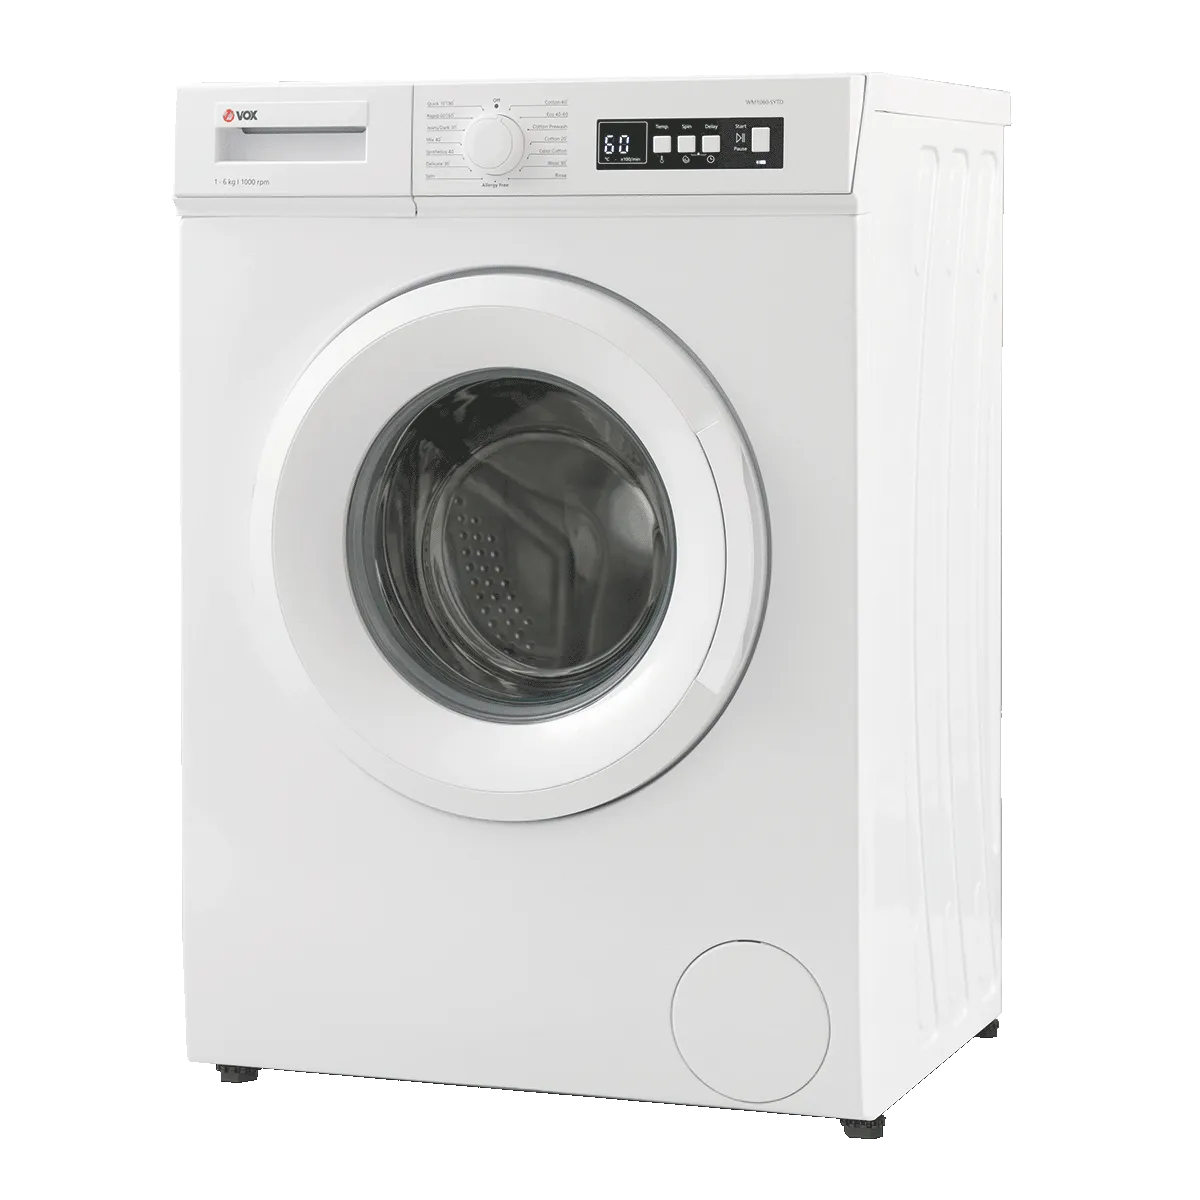 Washing machine WM1060-SYTD 